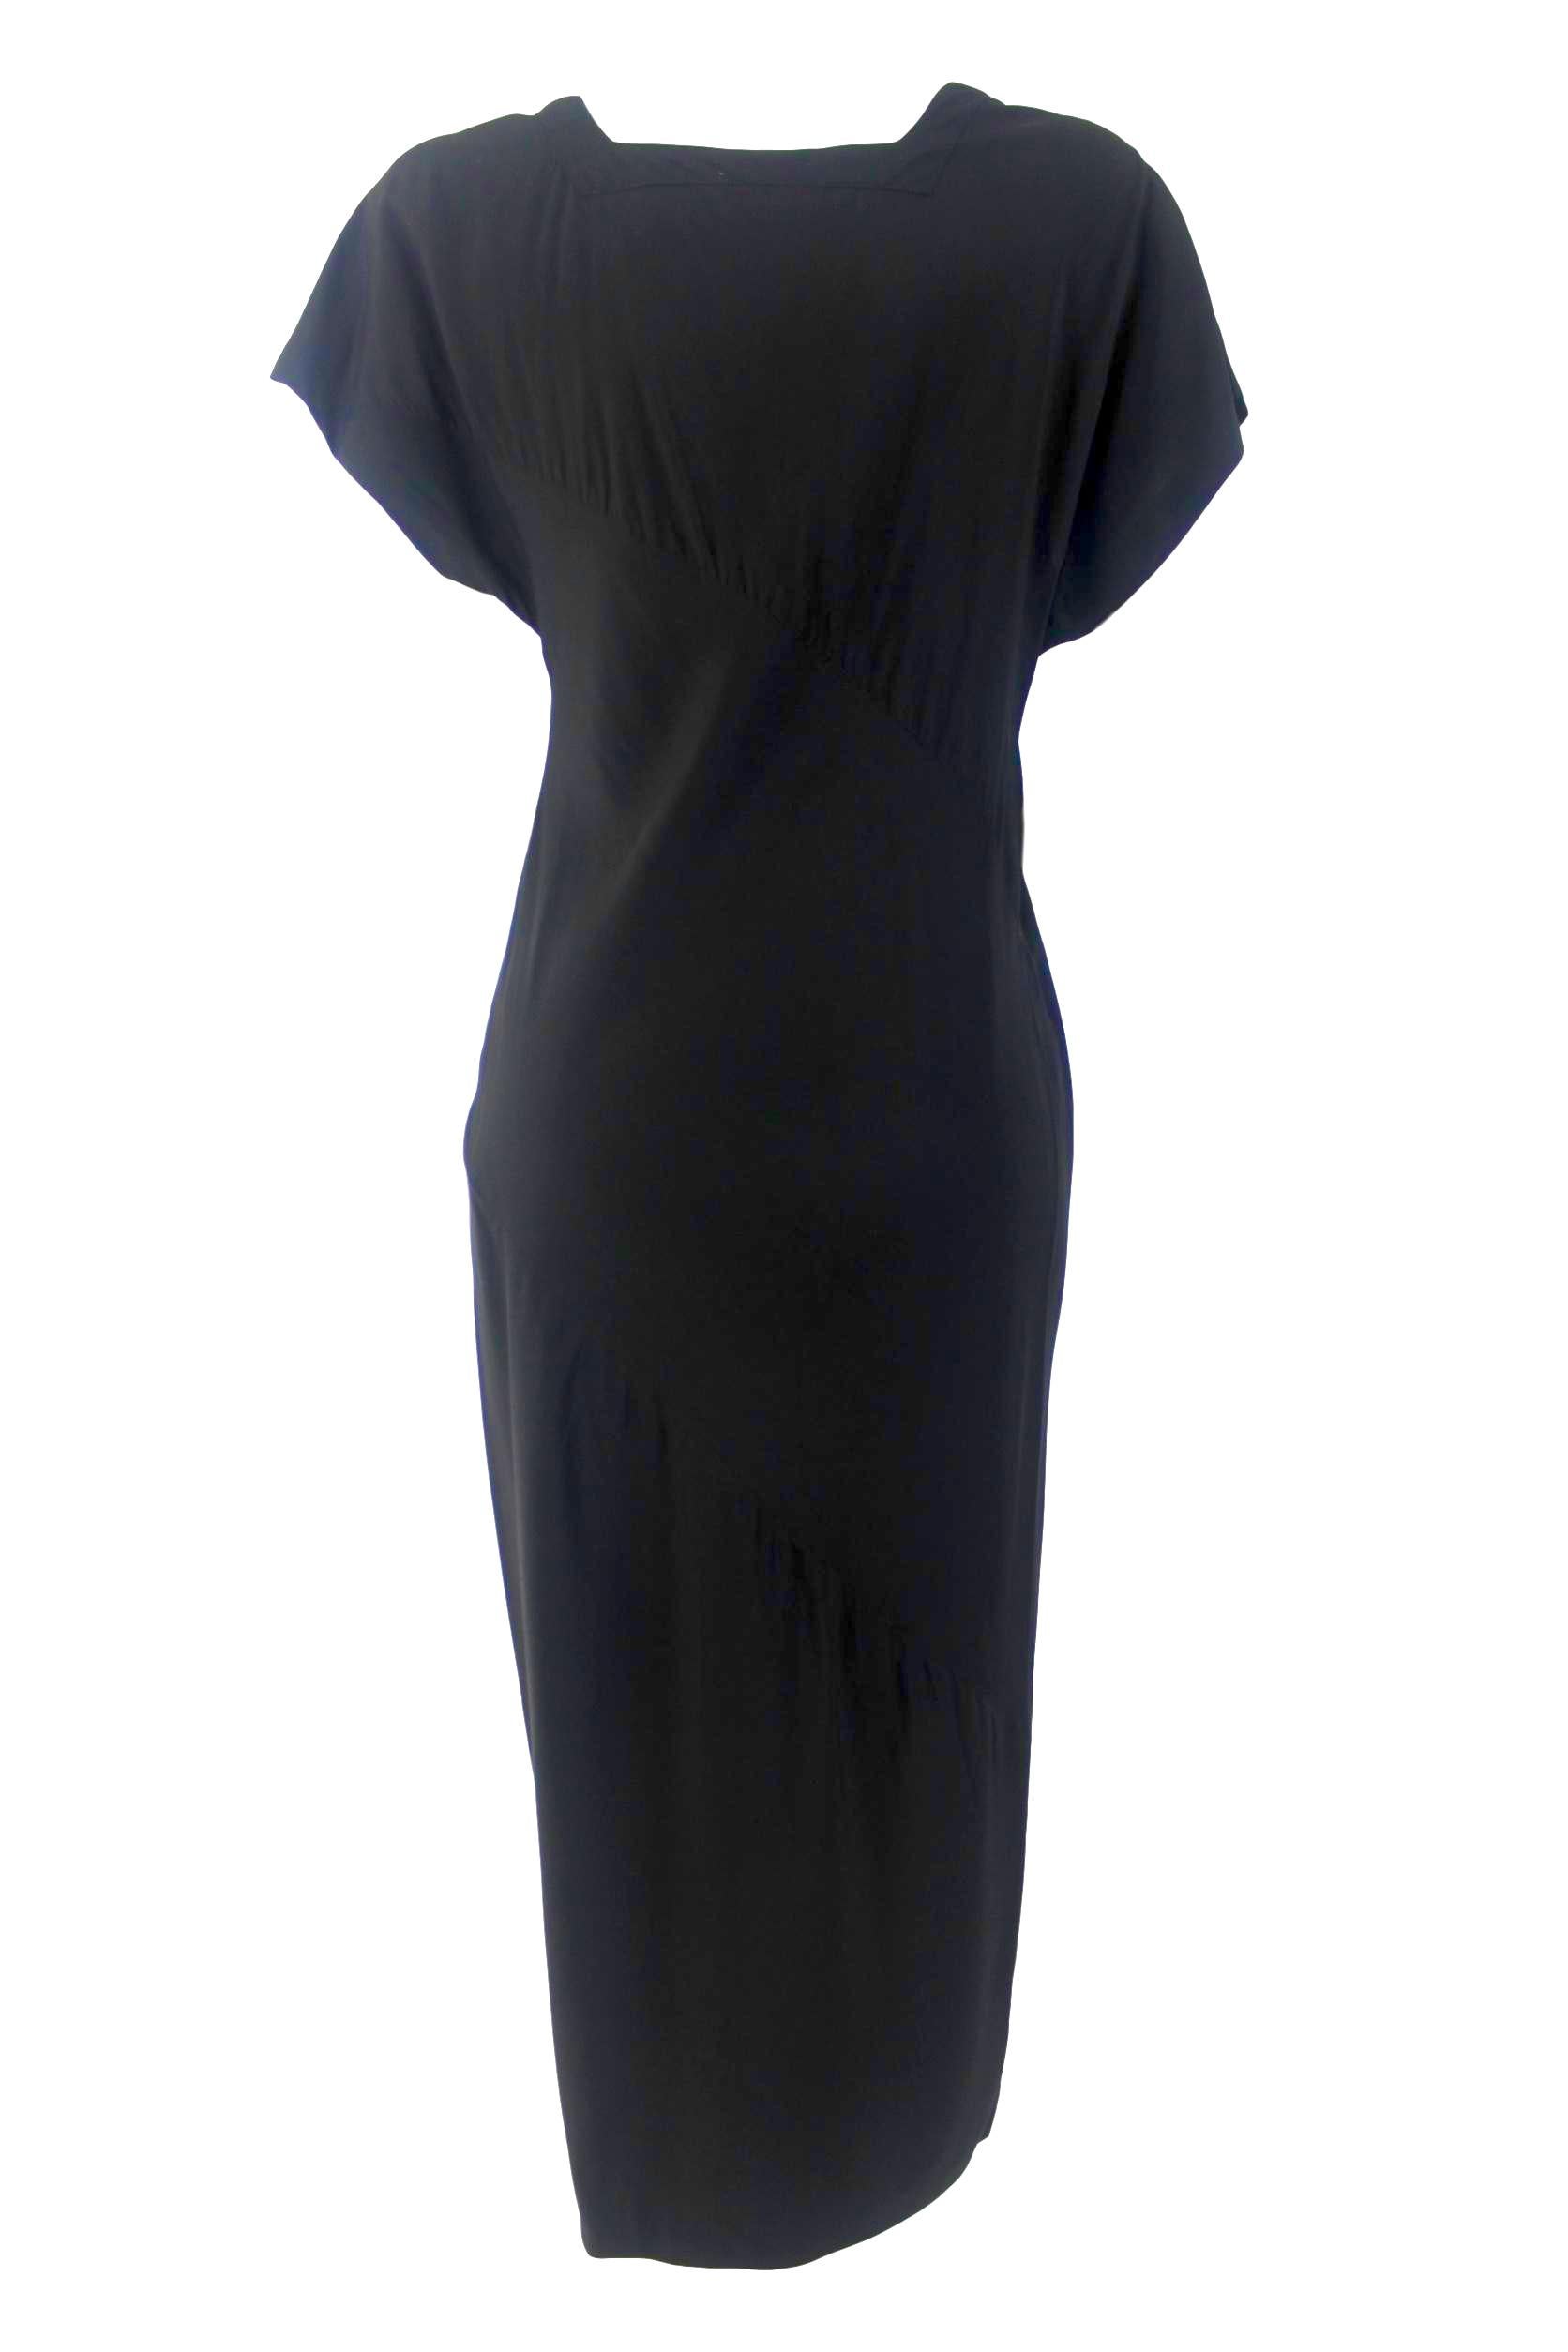 John Galliano Black Bias Cut Silk Dress Made in England Label For Sale 4